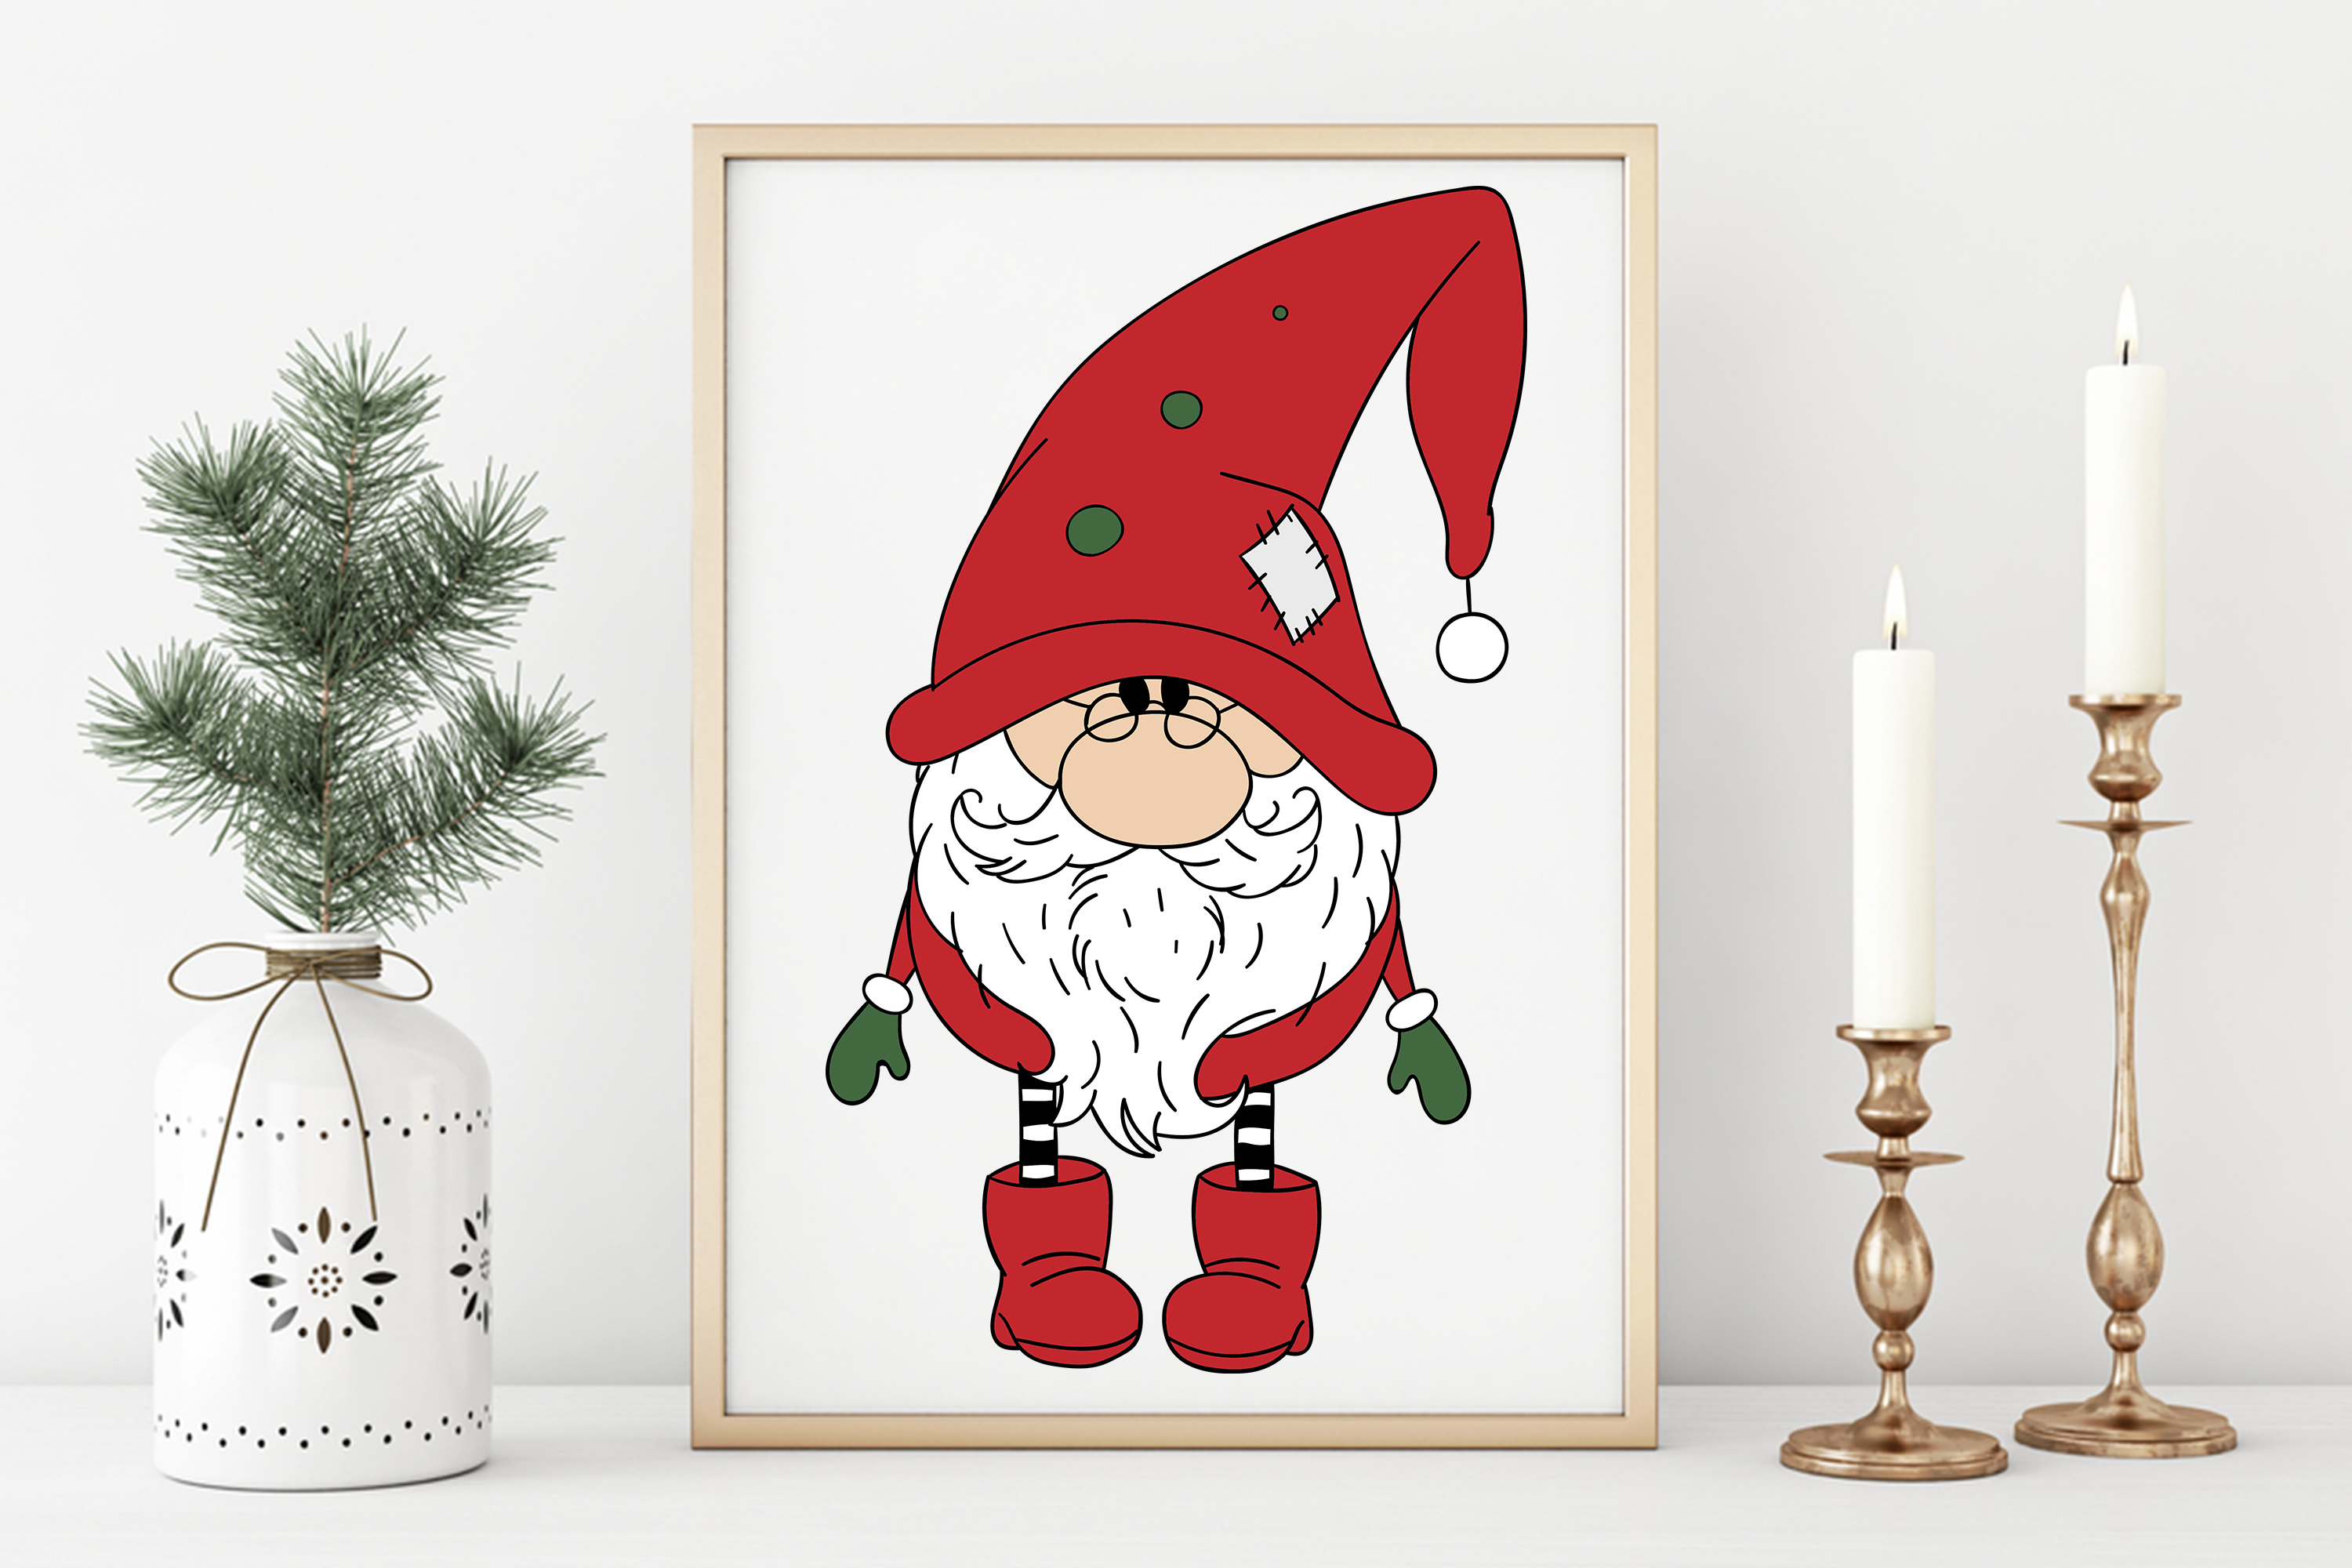 Download Christmas Gnomes SVG